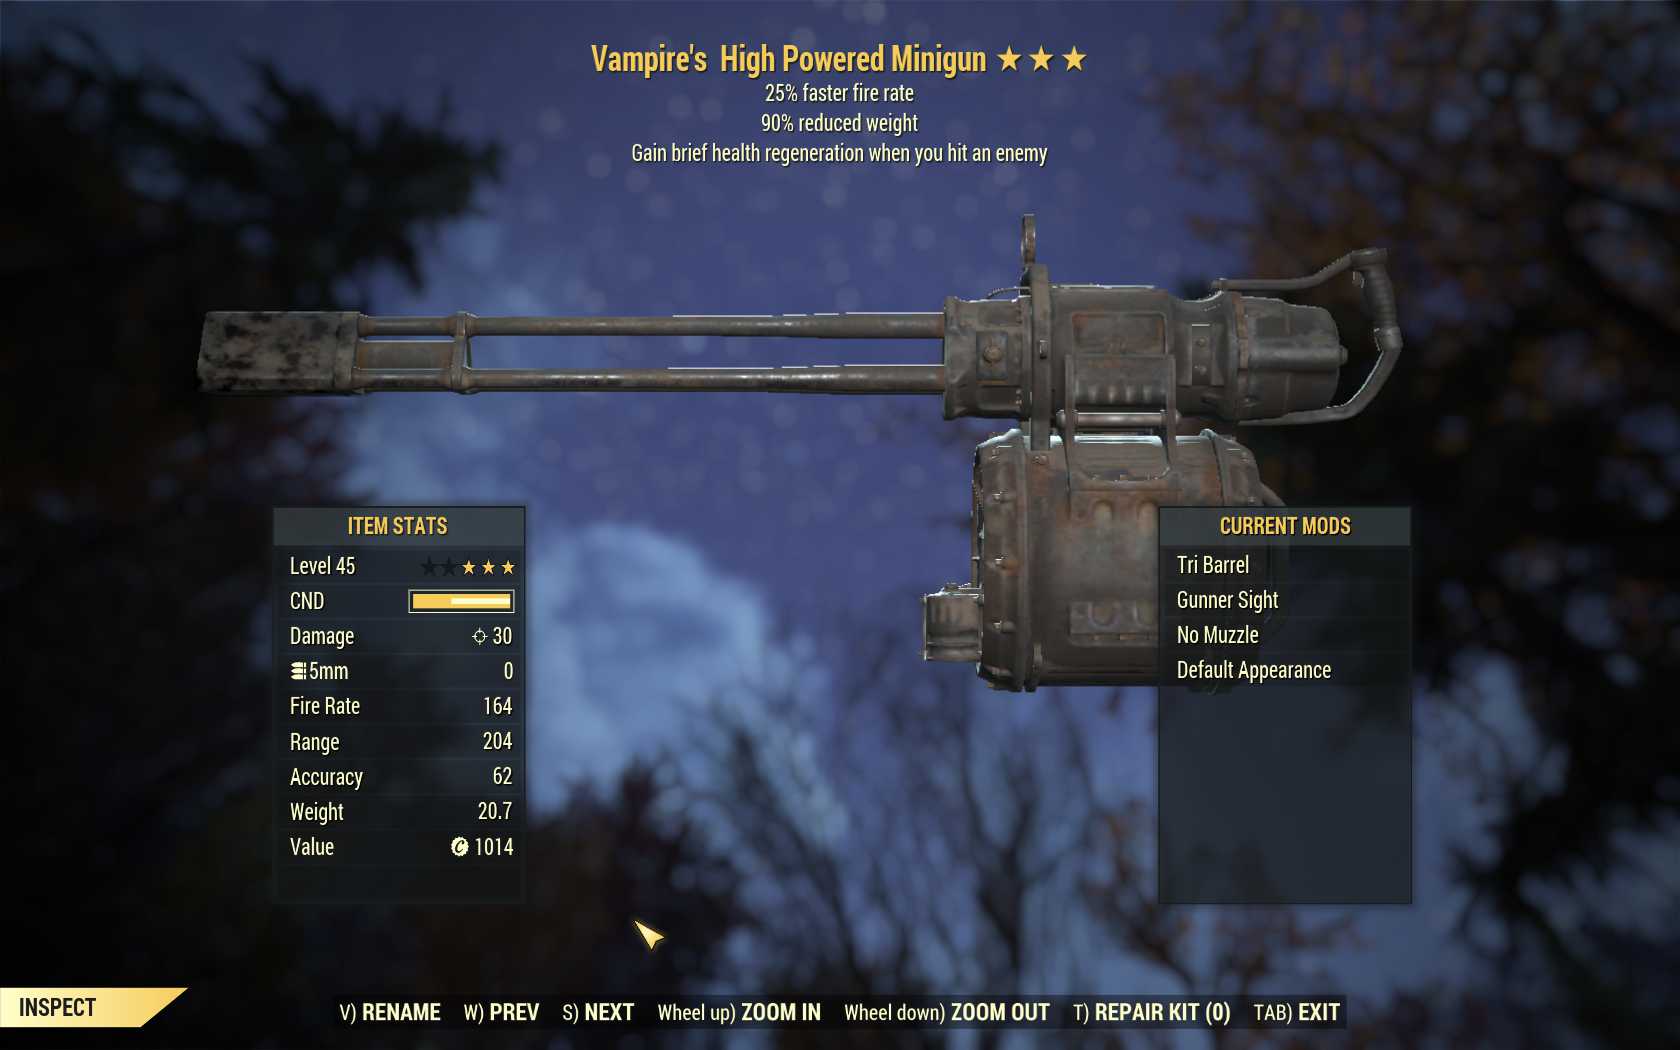 Vampire's Minigun (25% faster fire rate, 90% reduced weight)